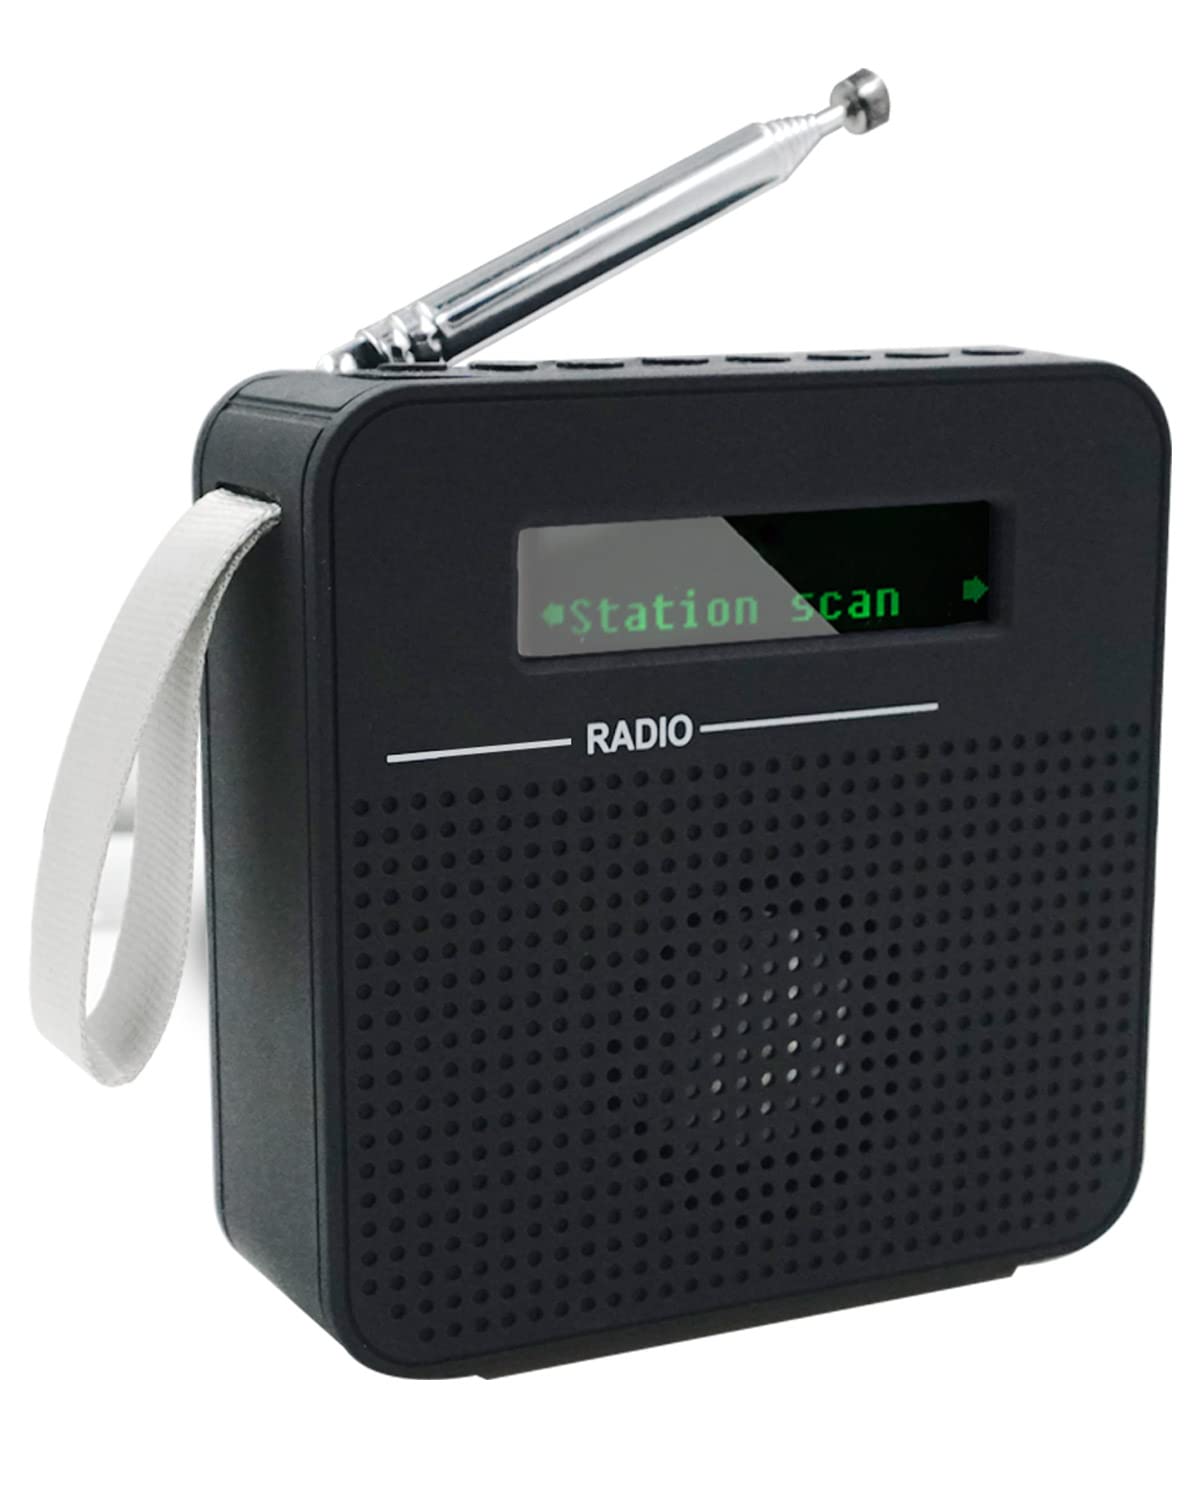 Maxesla DAB/DAB+ Radio Portable, Rechargeable Battery and Mains Powered Portable DAB Radios, DAB Radio with Bluetooth, Digital Radio & FM Radio, 40 Preset Stations, LCD Display, Dual Alarm Clock